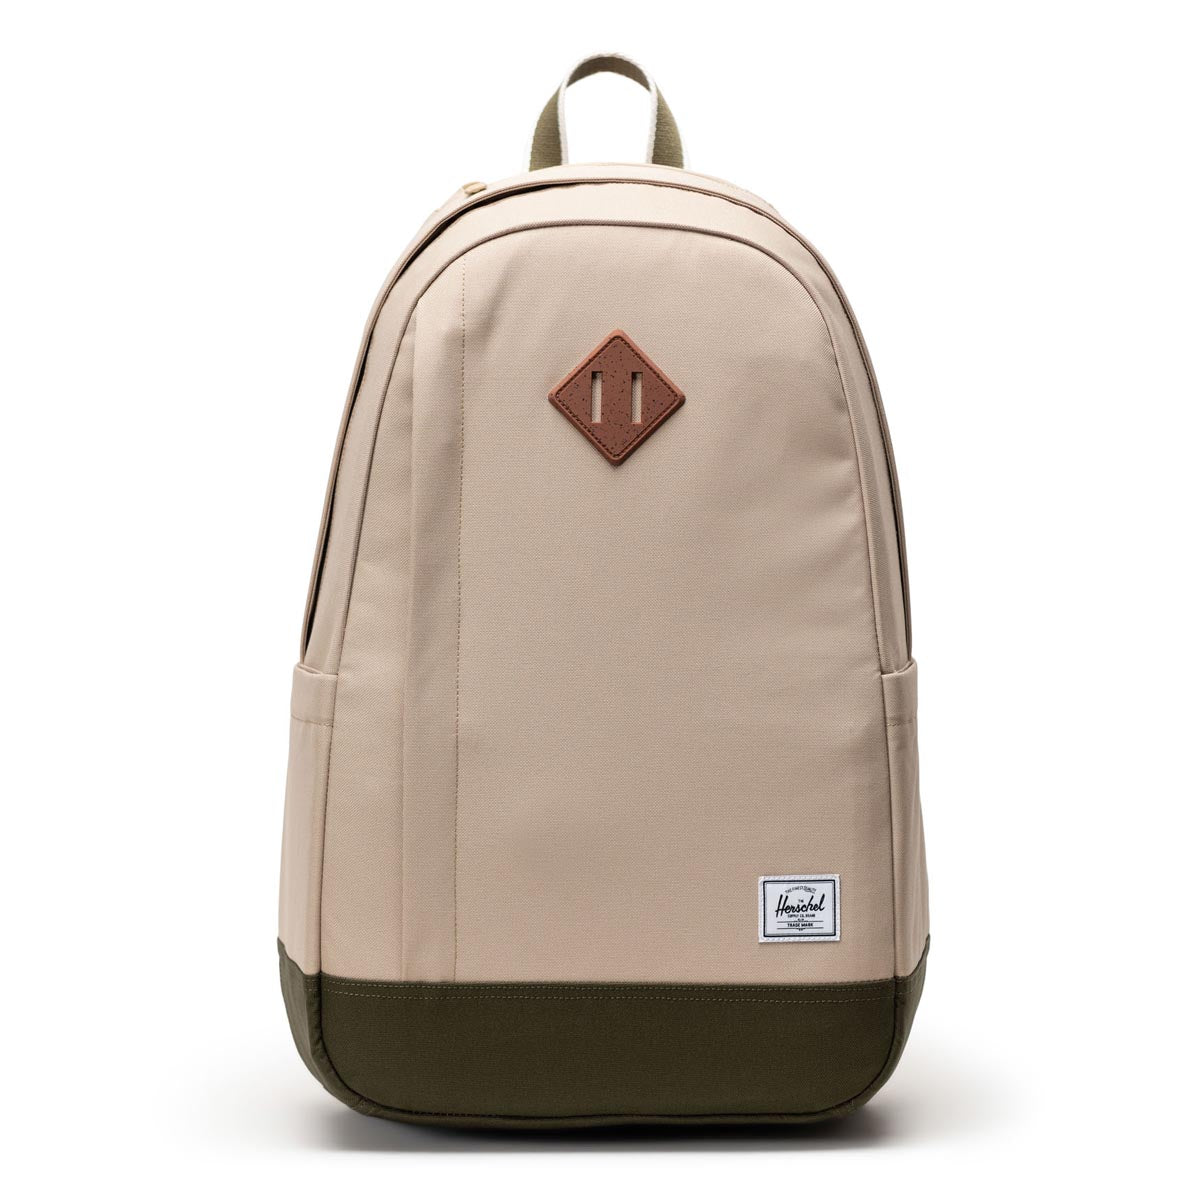 Herschel Supply Seymour Backpack - Twill/Ivy Green image 1